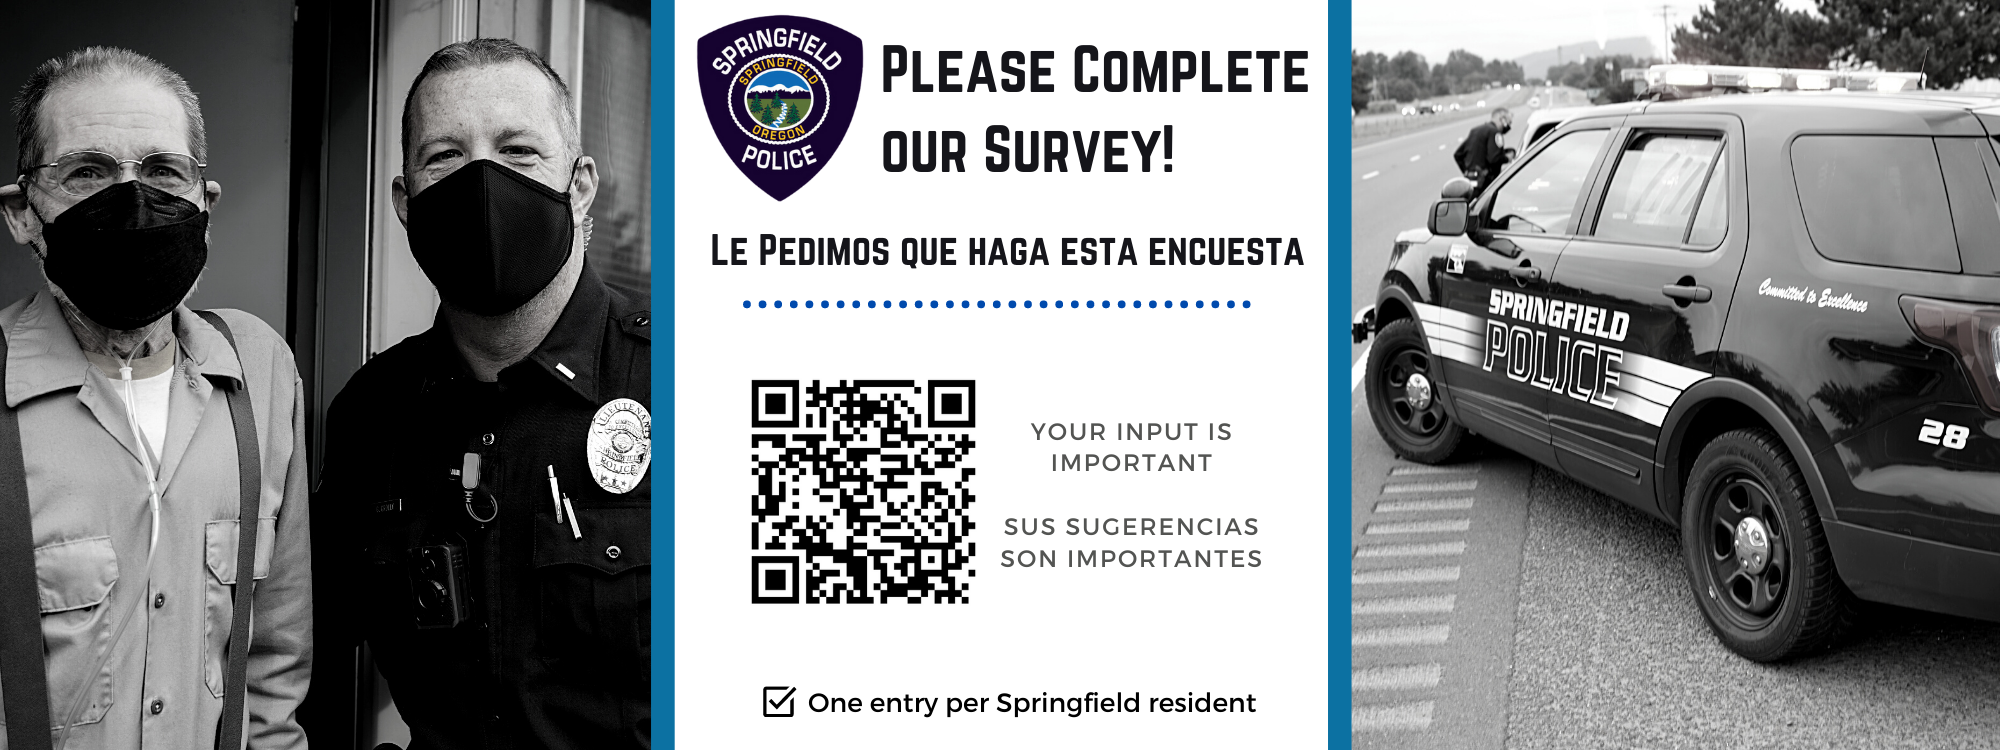 Community Survey